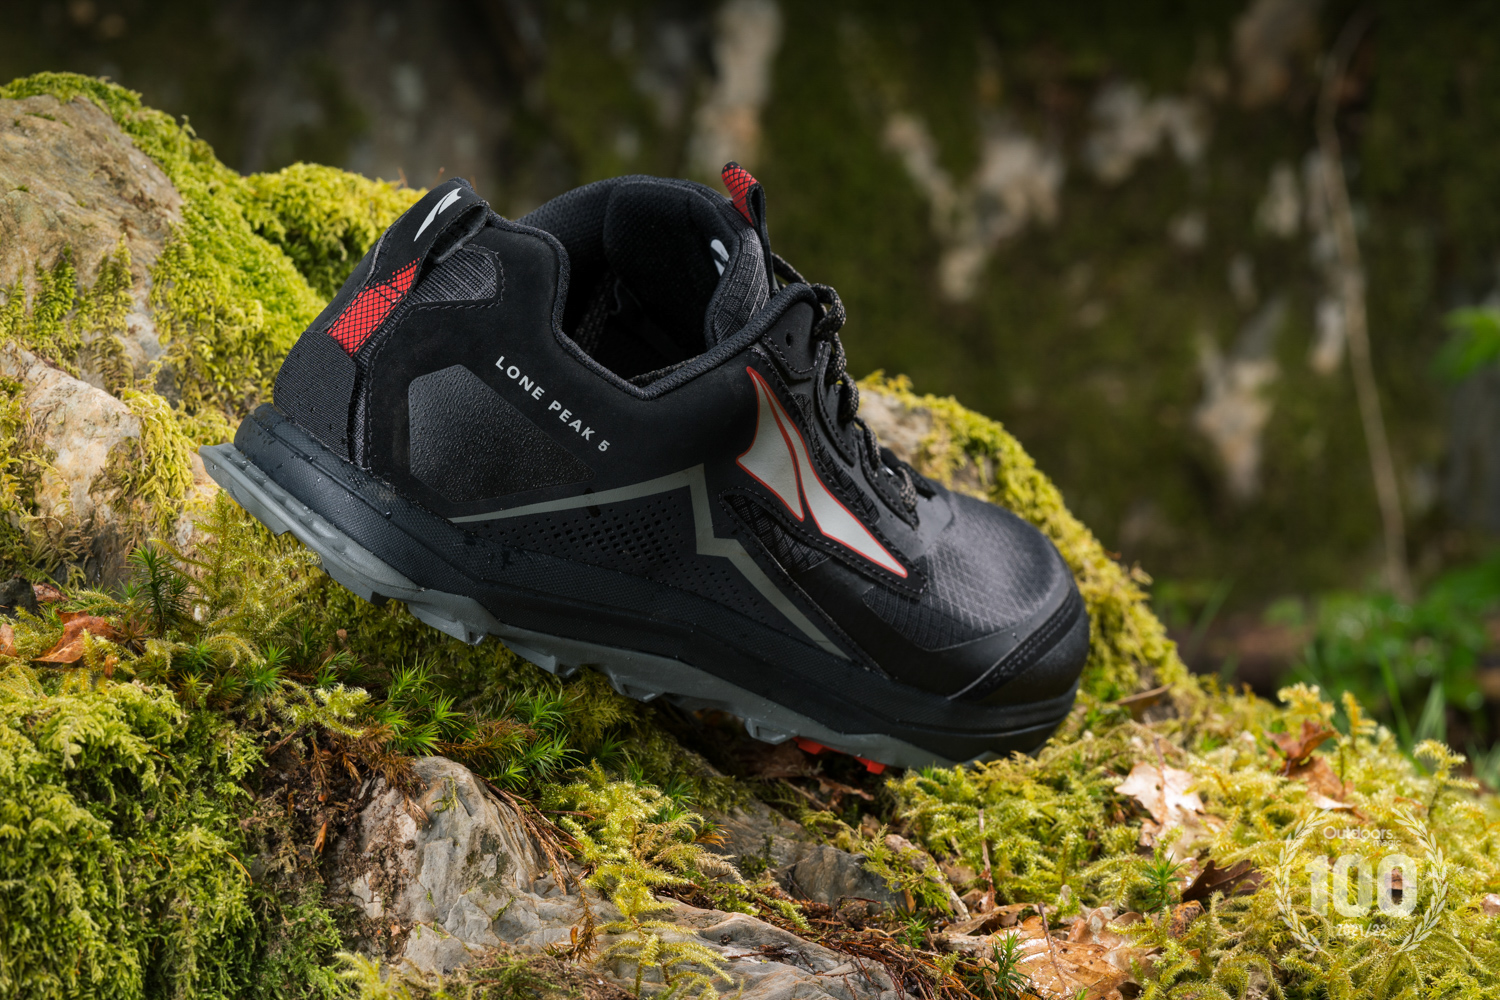 Altra - Lone Peak 5.0 - Trail Shoe Review